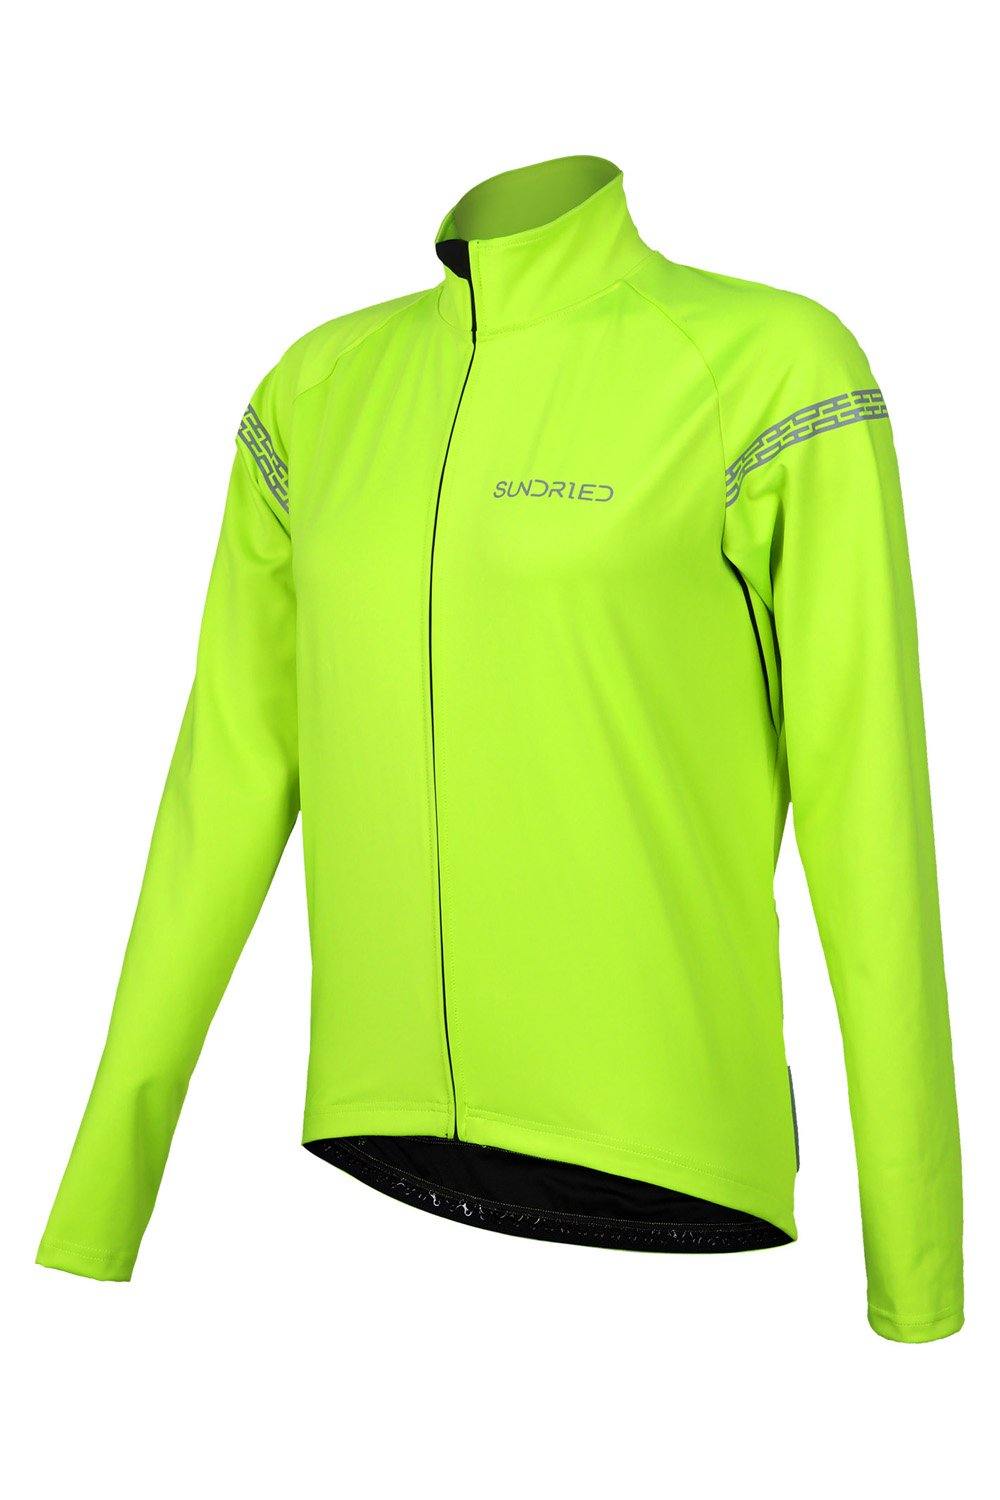 Sundried Equipe Women's Bike Jacket Cycle Jacket XS Green SD0344 XS Green Activewear